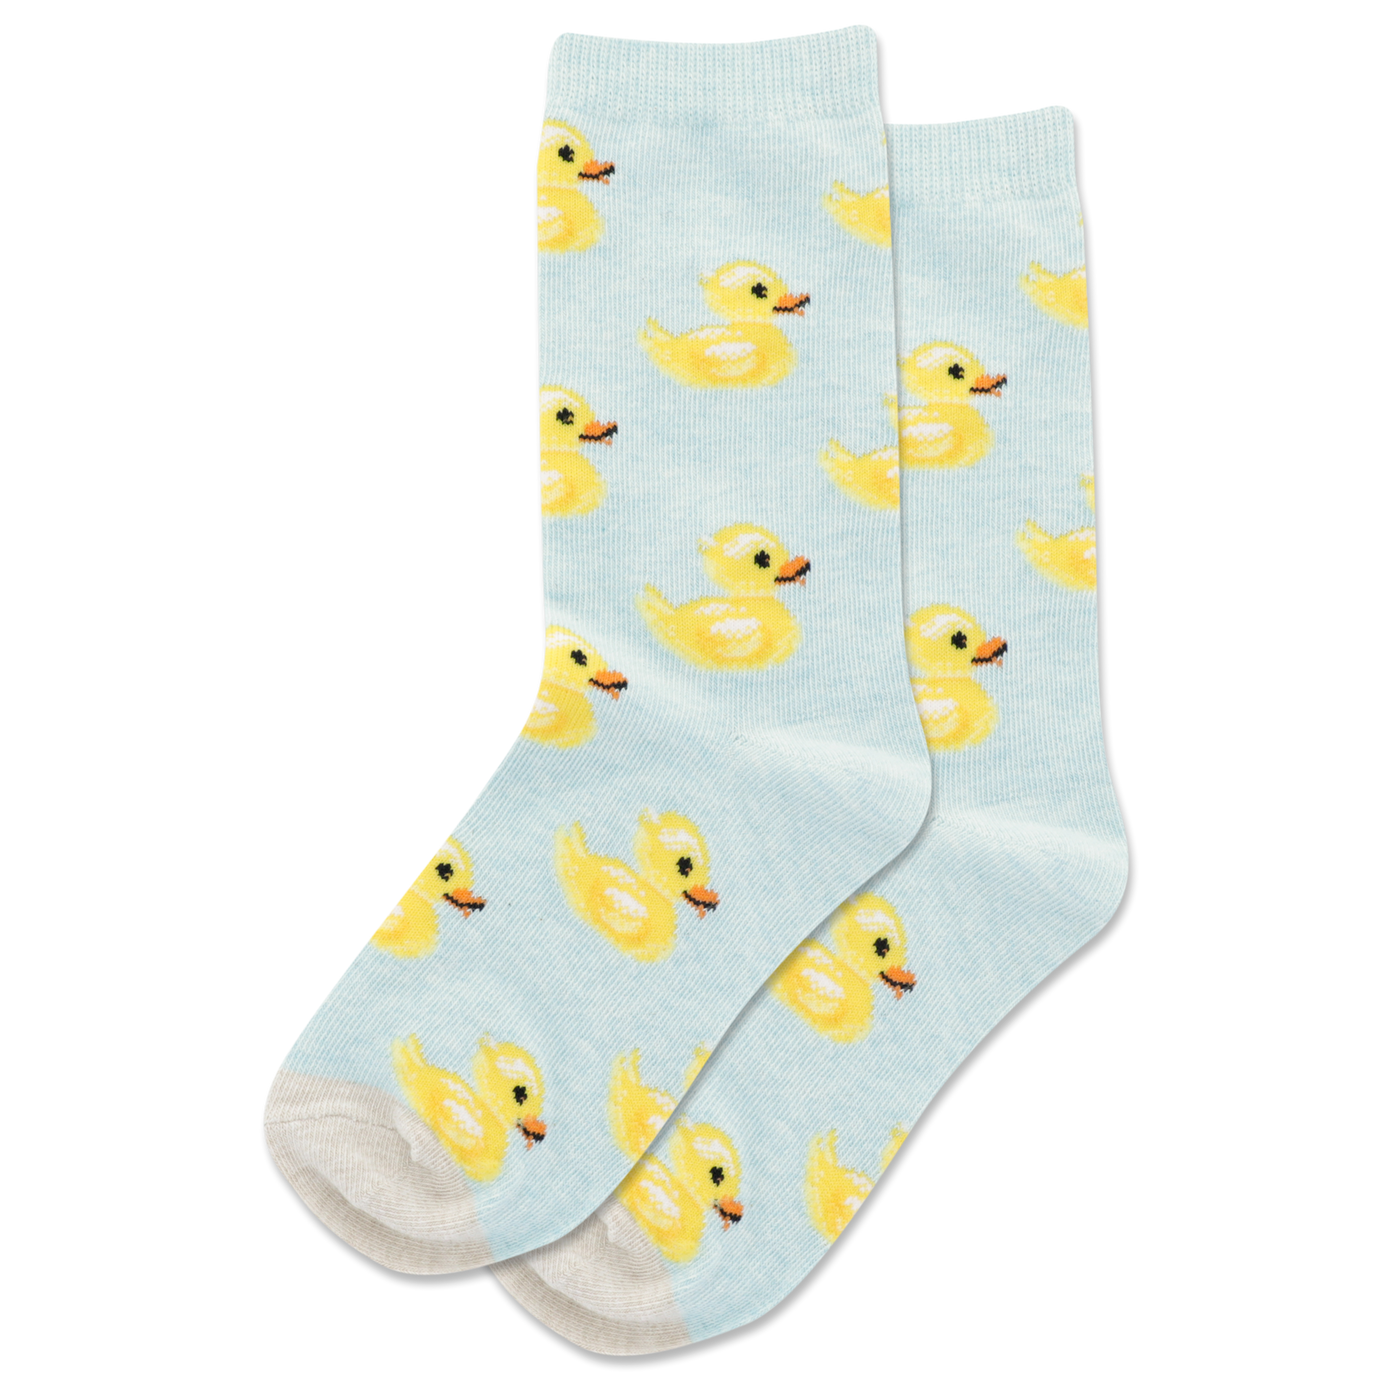 Kid's "Rubber Duck" Crew Socks by Hot Sox